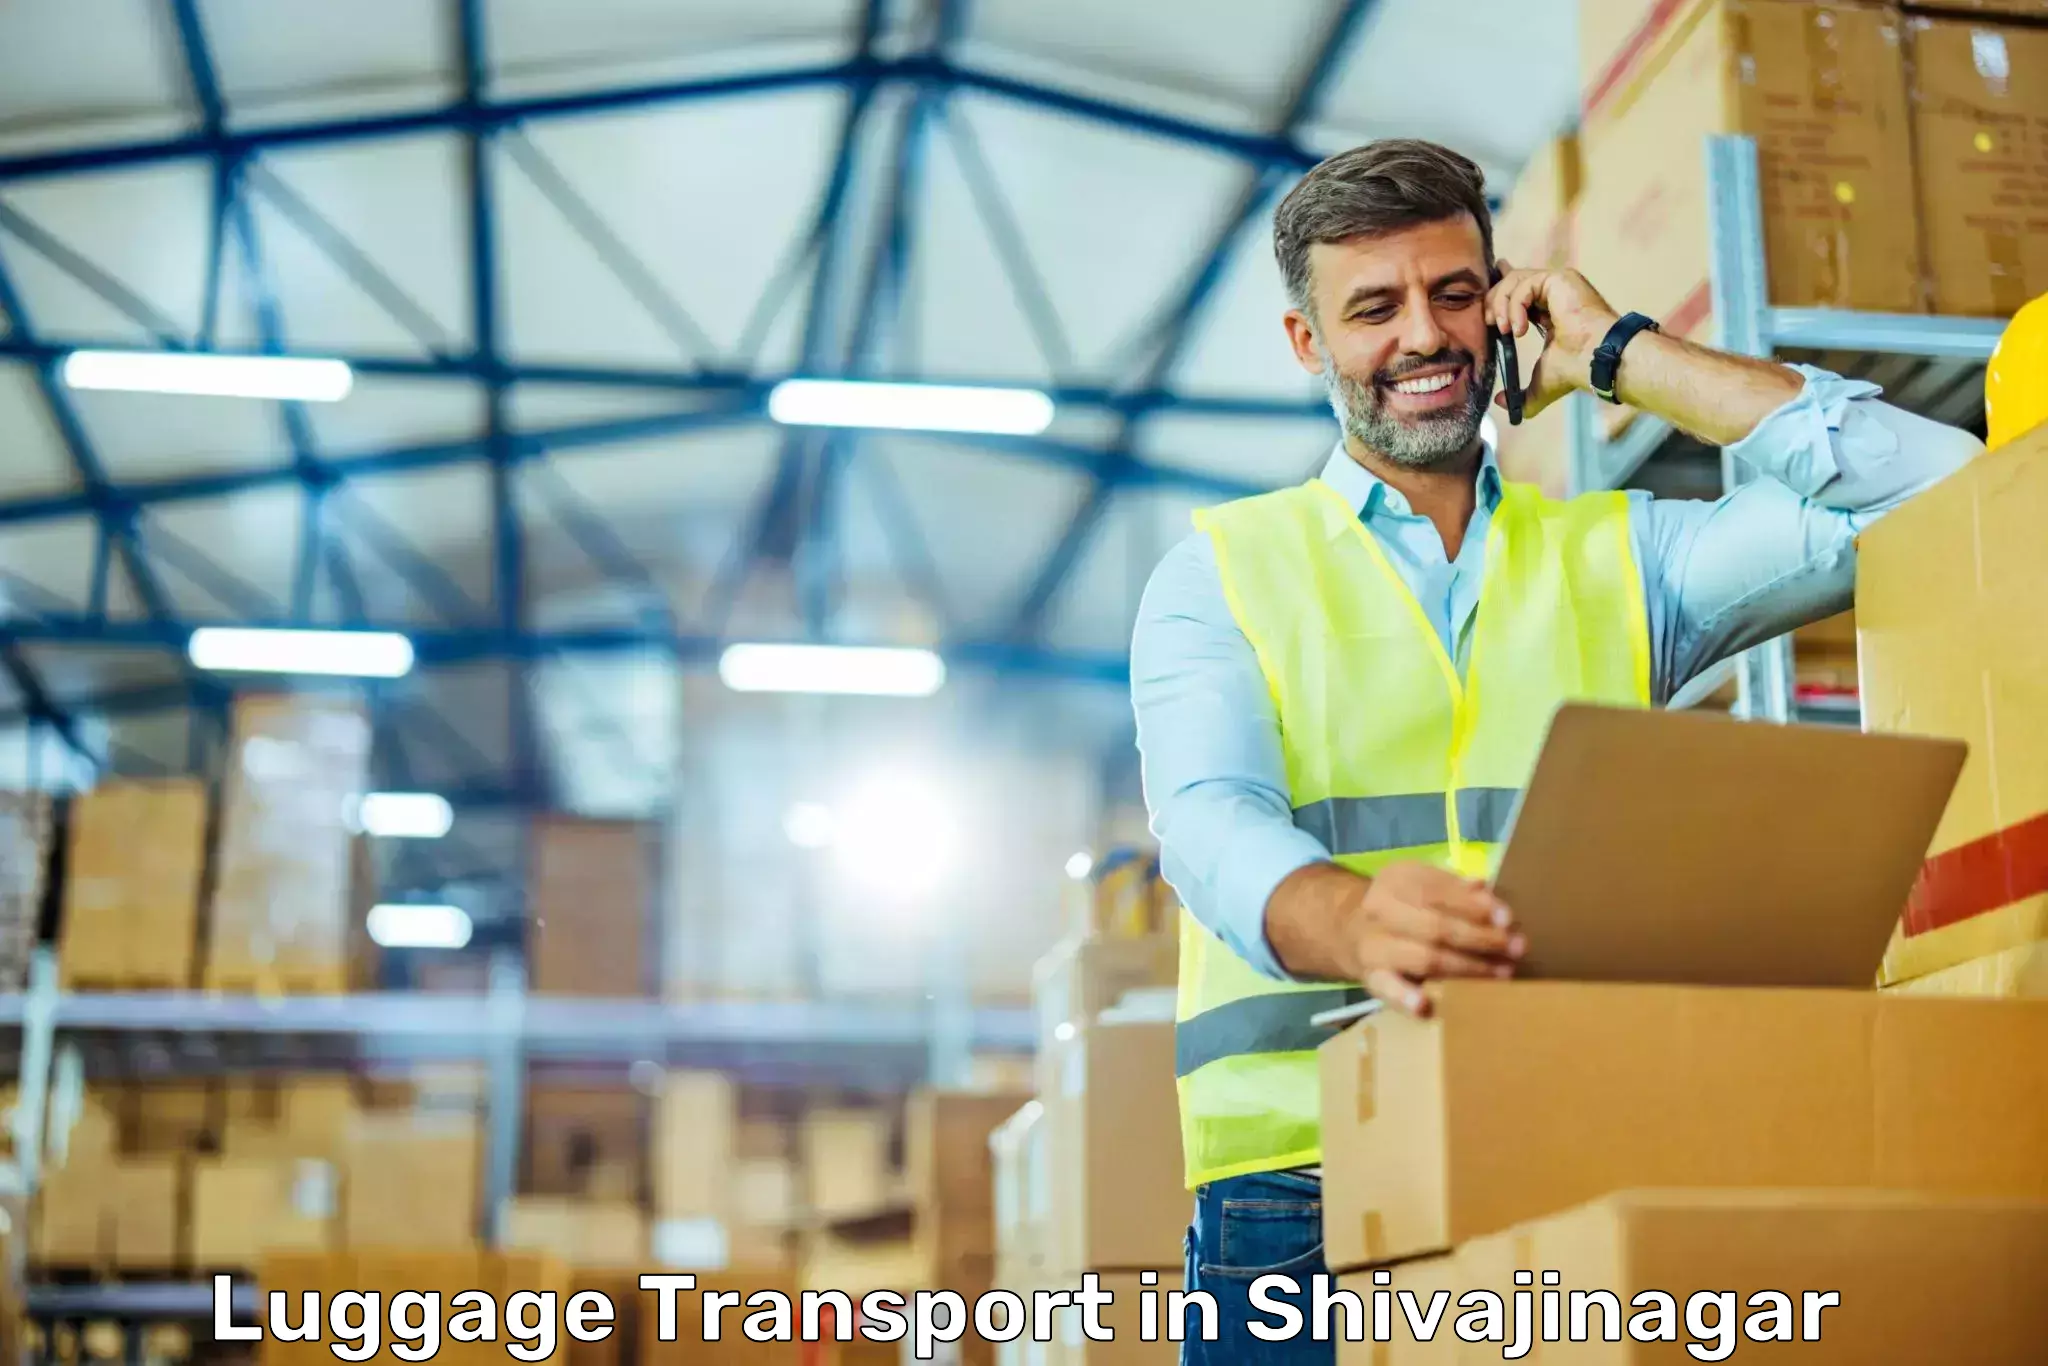 Luggage shipment tracking in Shivajinagar